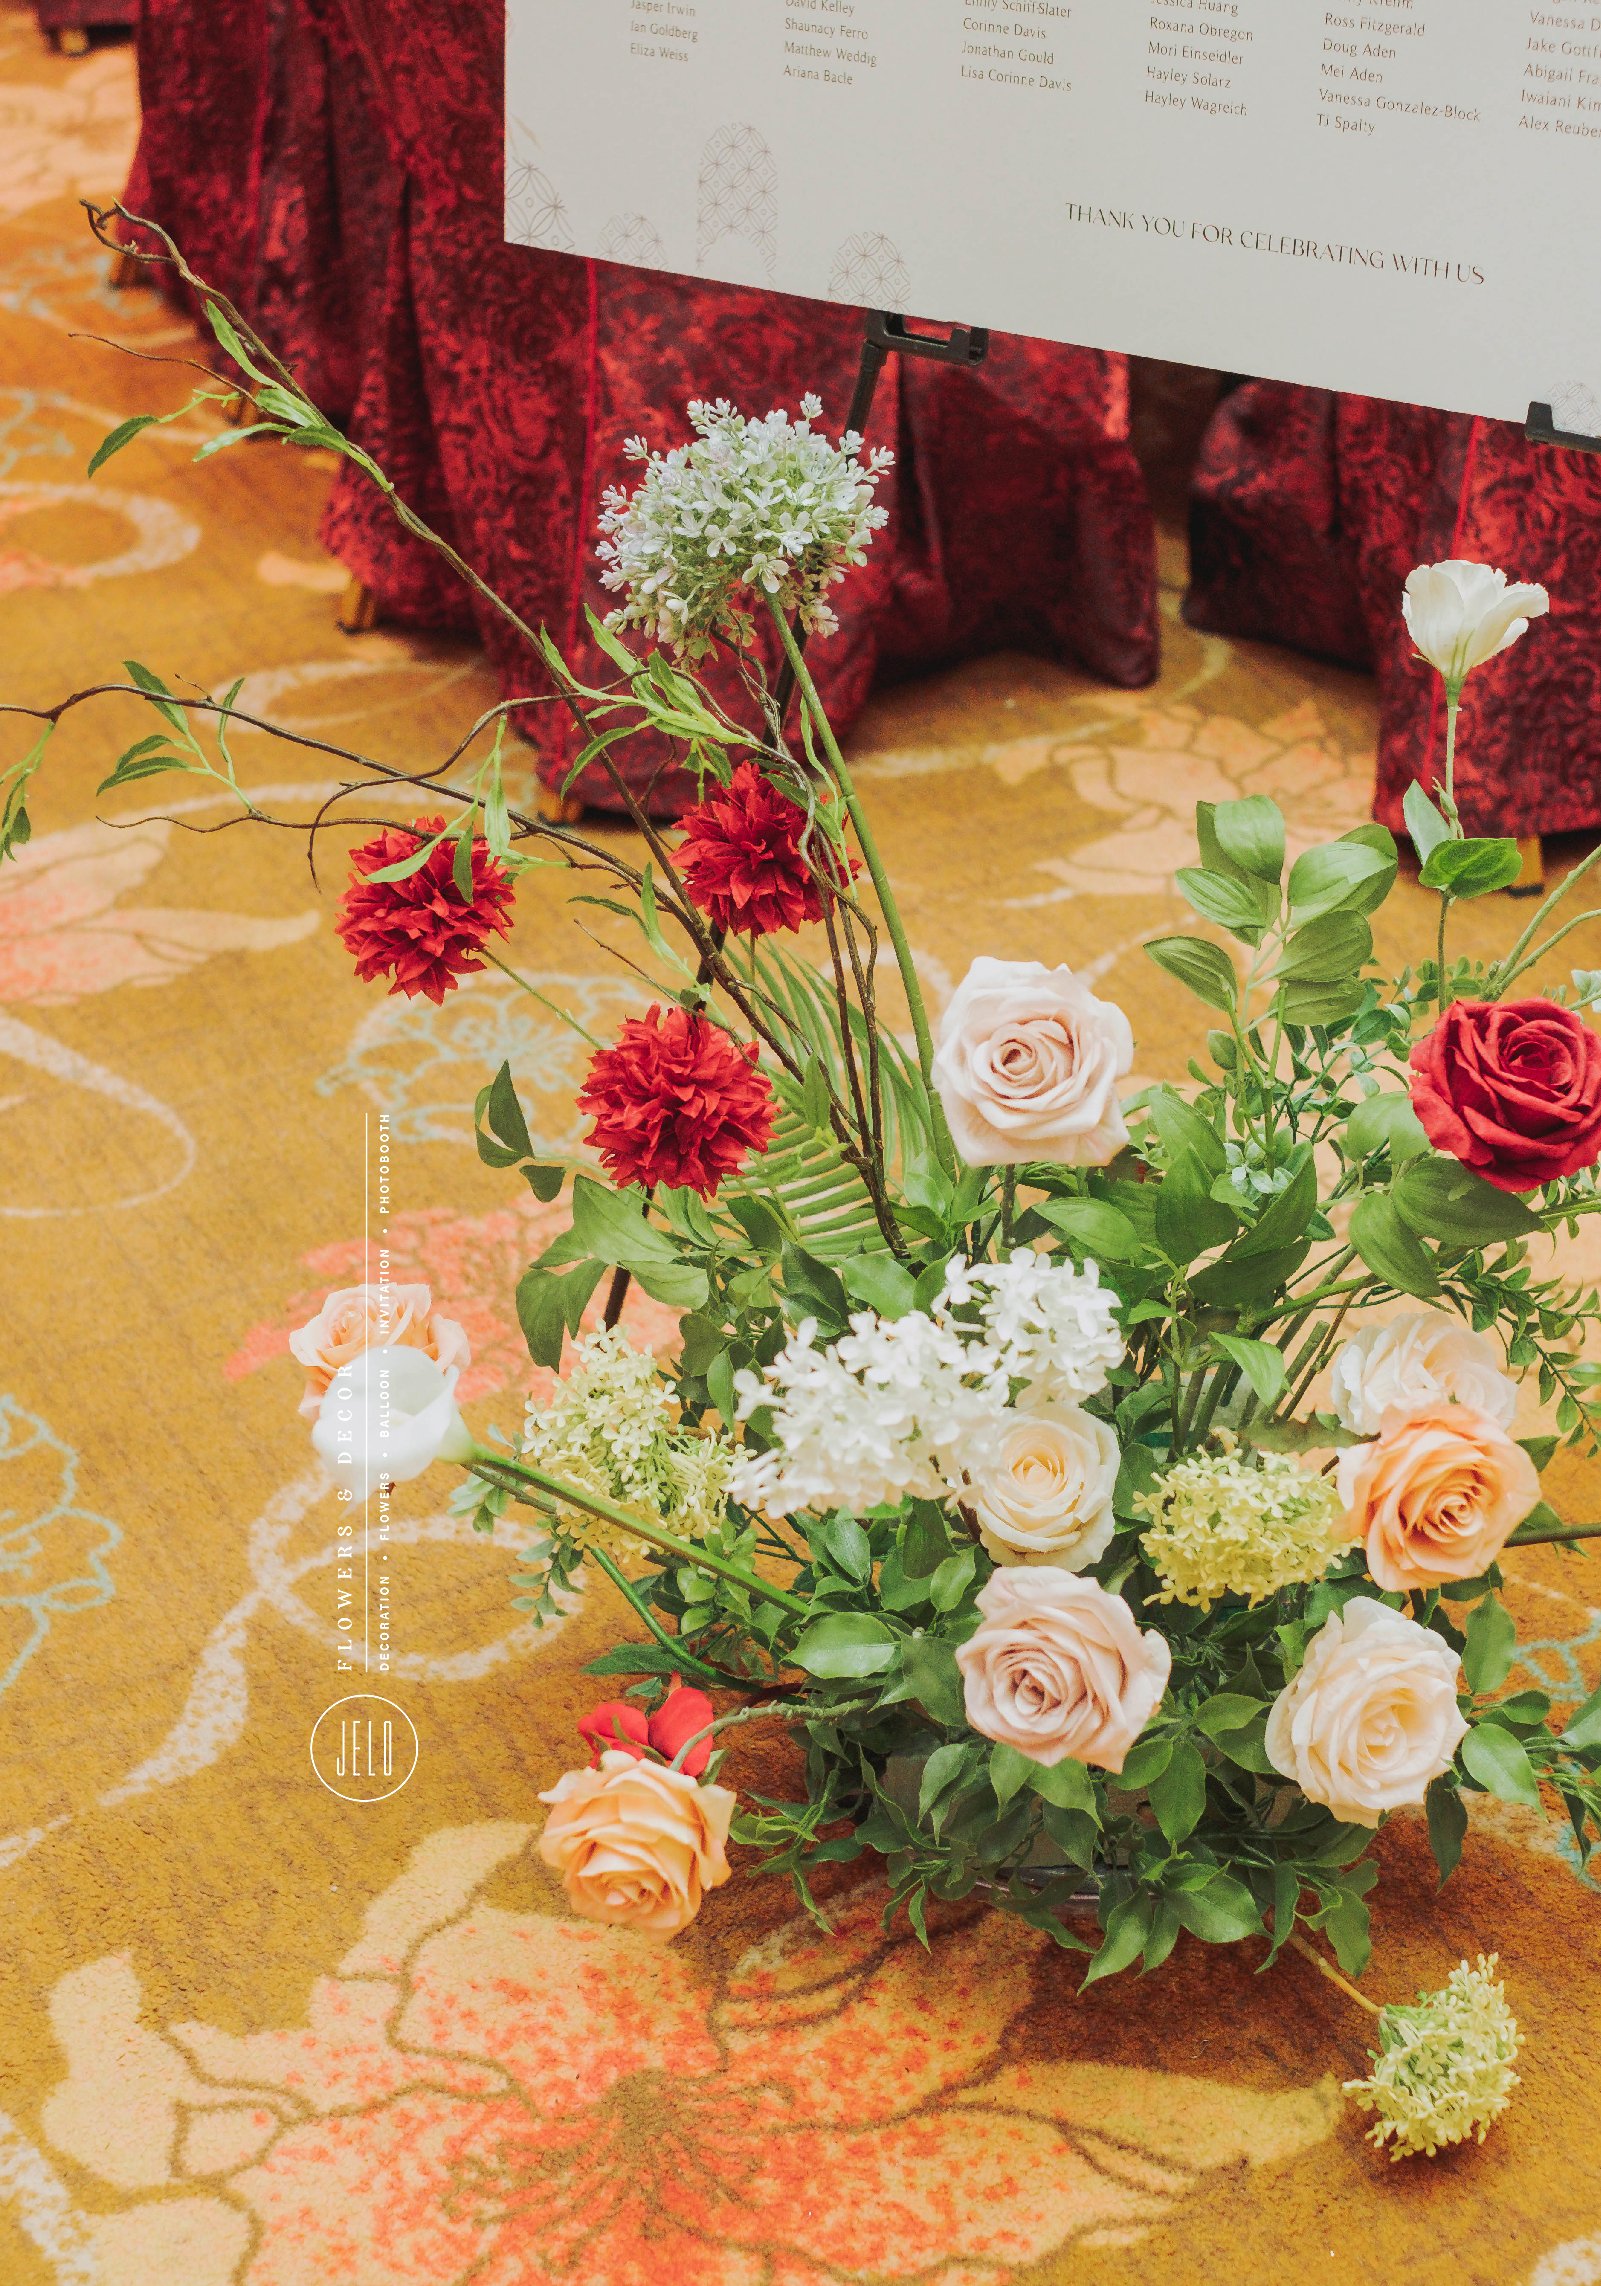 hebei huiya wedding flowers decoration with